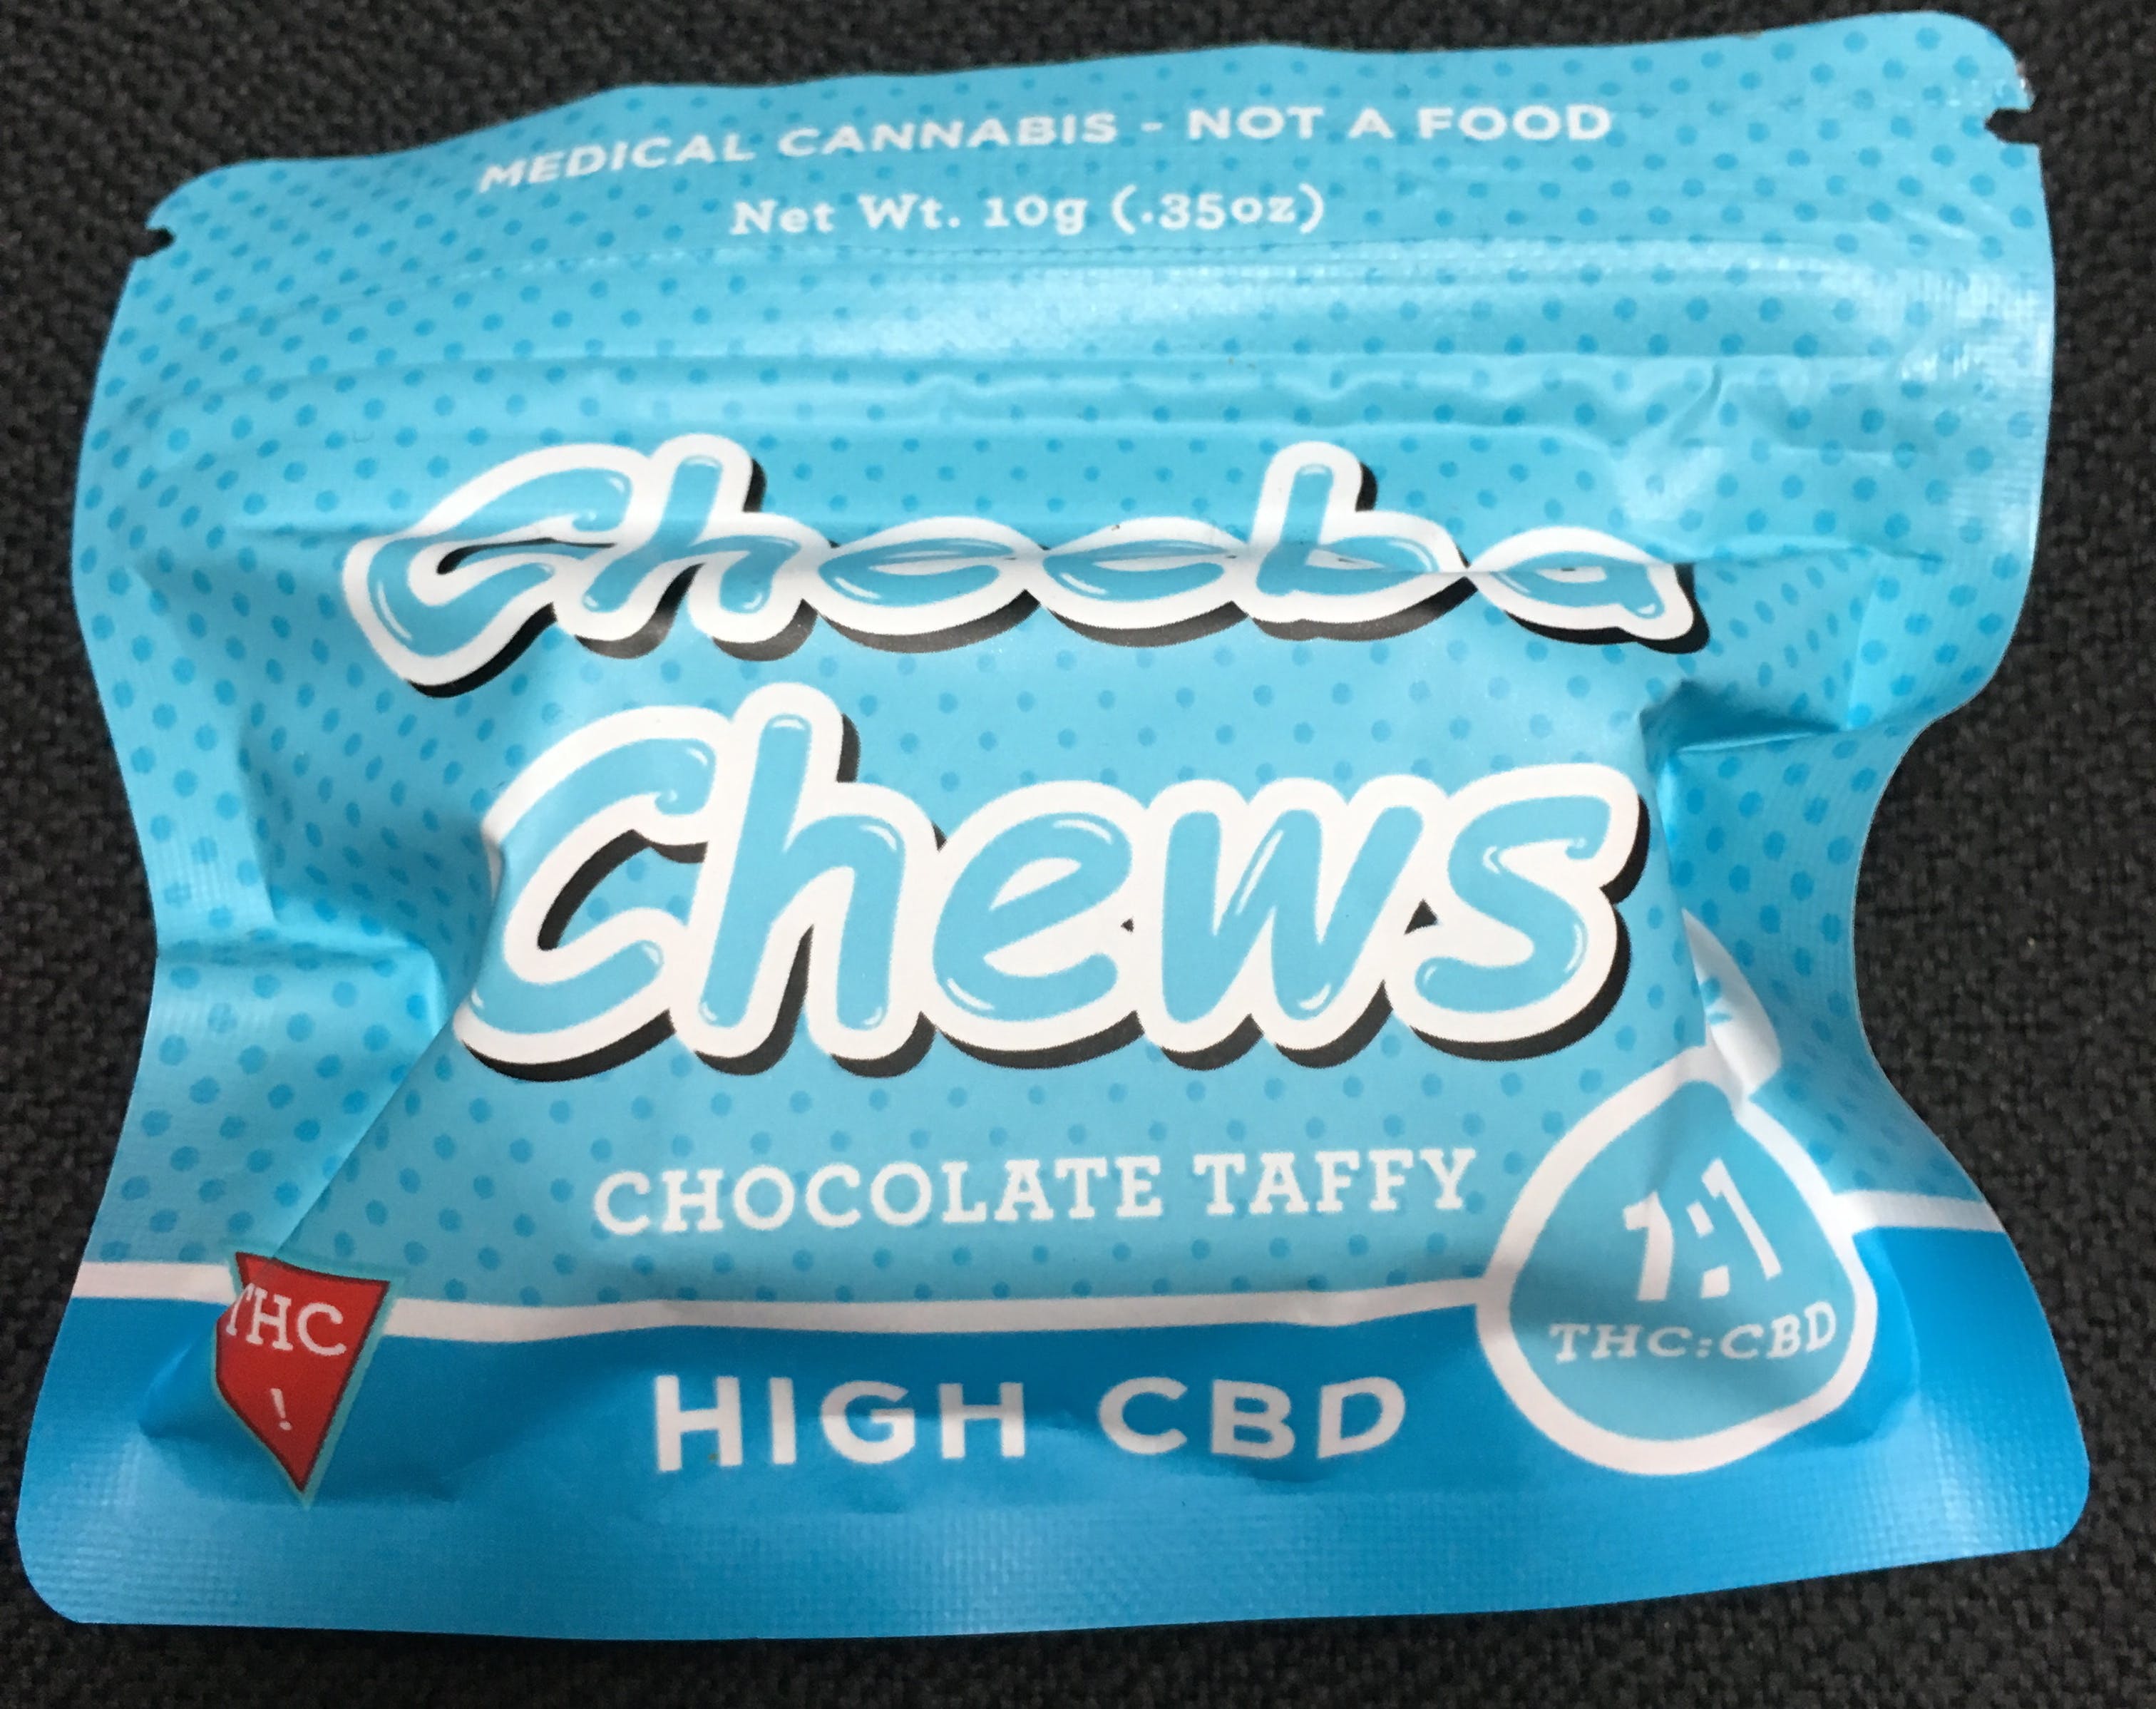 edible-cheeba-chews-high-cbd-1-1-thc-cbd